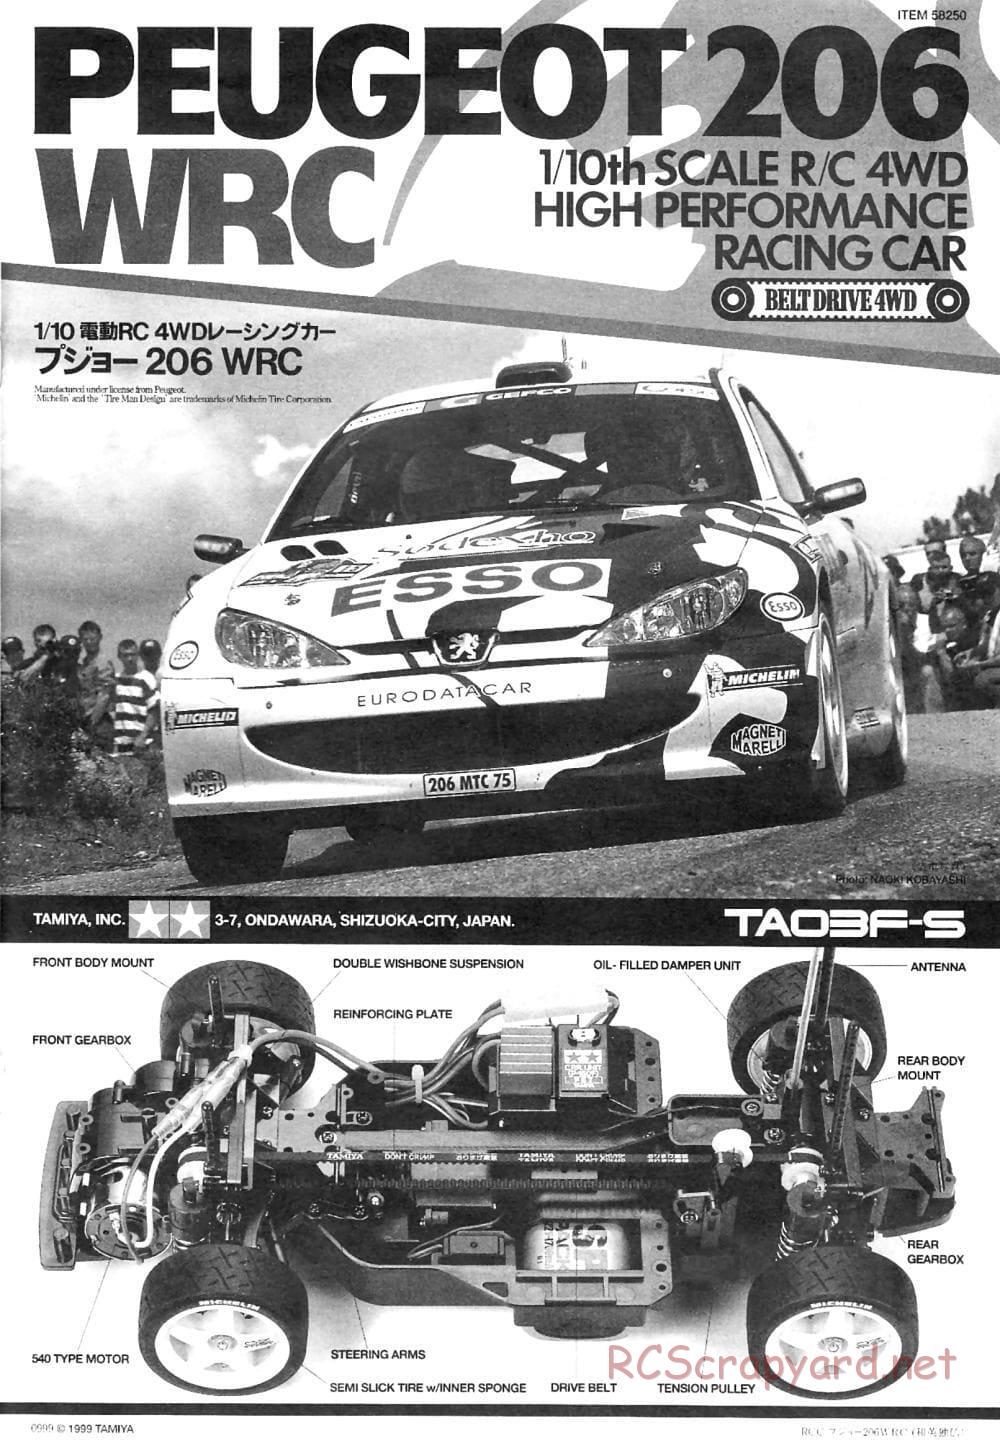 Tamiya - Peugeot 206 WRC - TA-03FS Chassis - Manual - Page 1